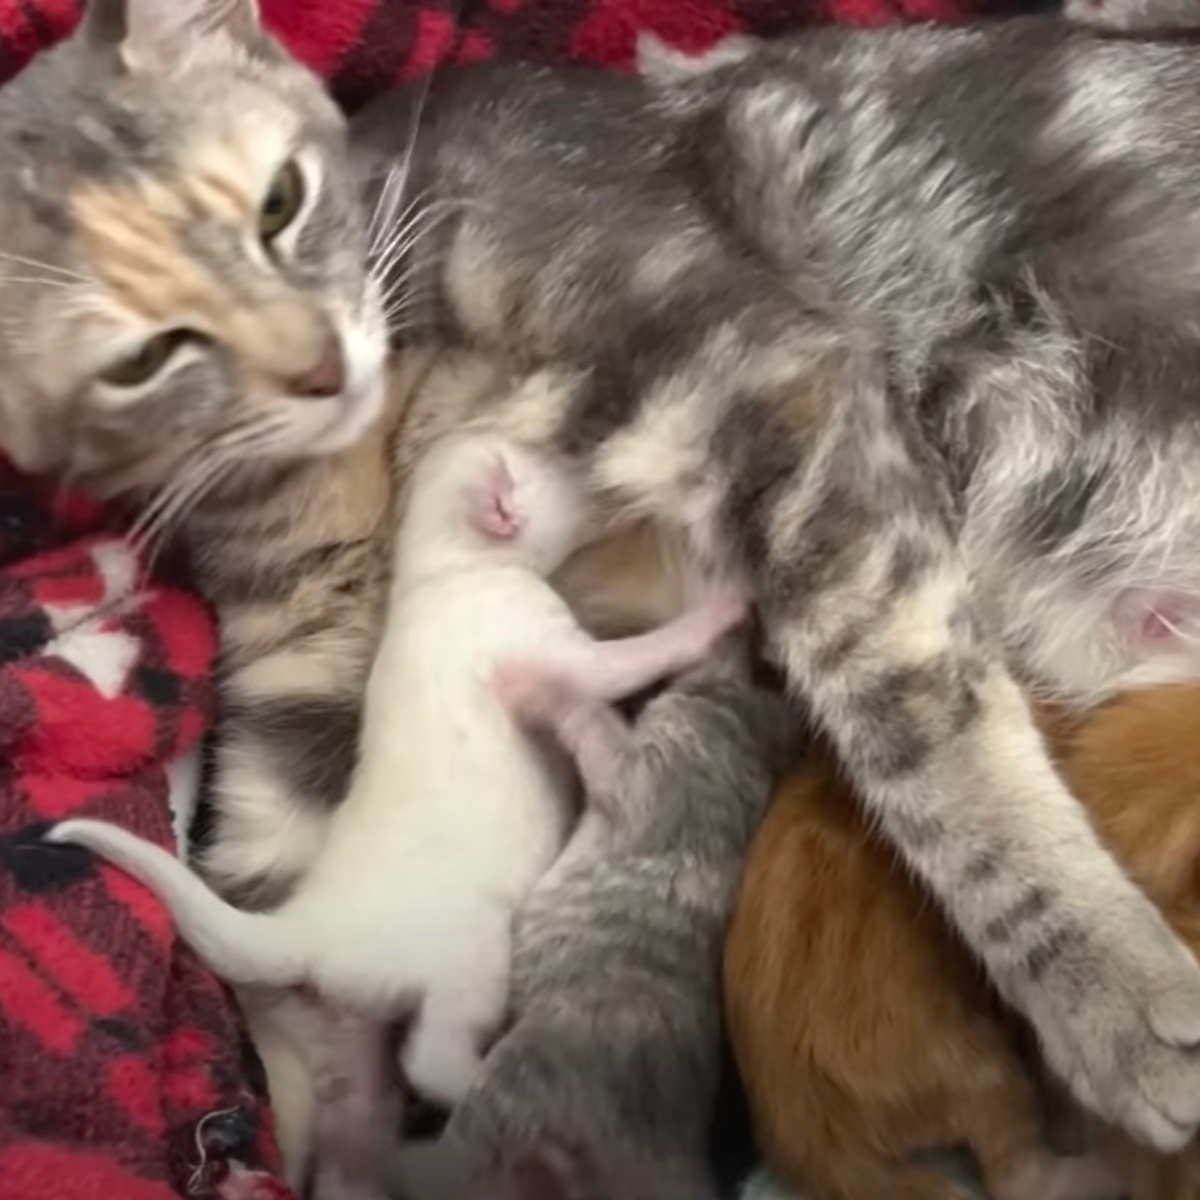 mama cat breastfeeding kittens